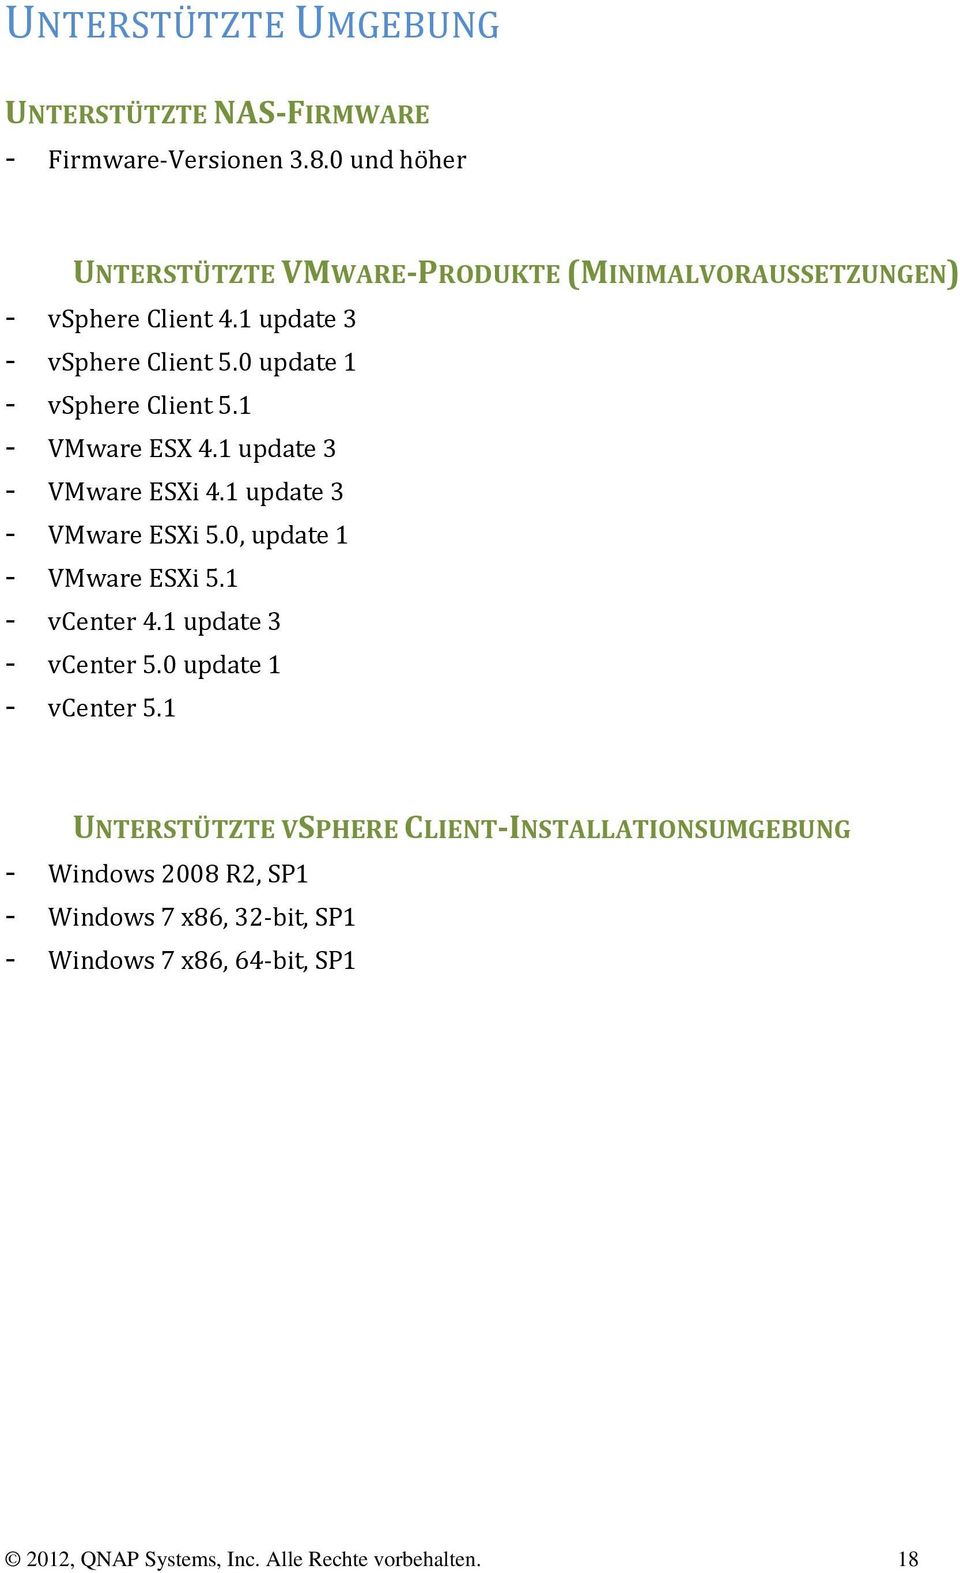 0 update 1 - vsphere Client 5.1 - VMware ESX 4.1 update 3 - VMware ESXi 4.1 update 3 - VMware ESXi 5.0, update 1 - VMware ESXi 5.